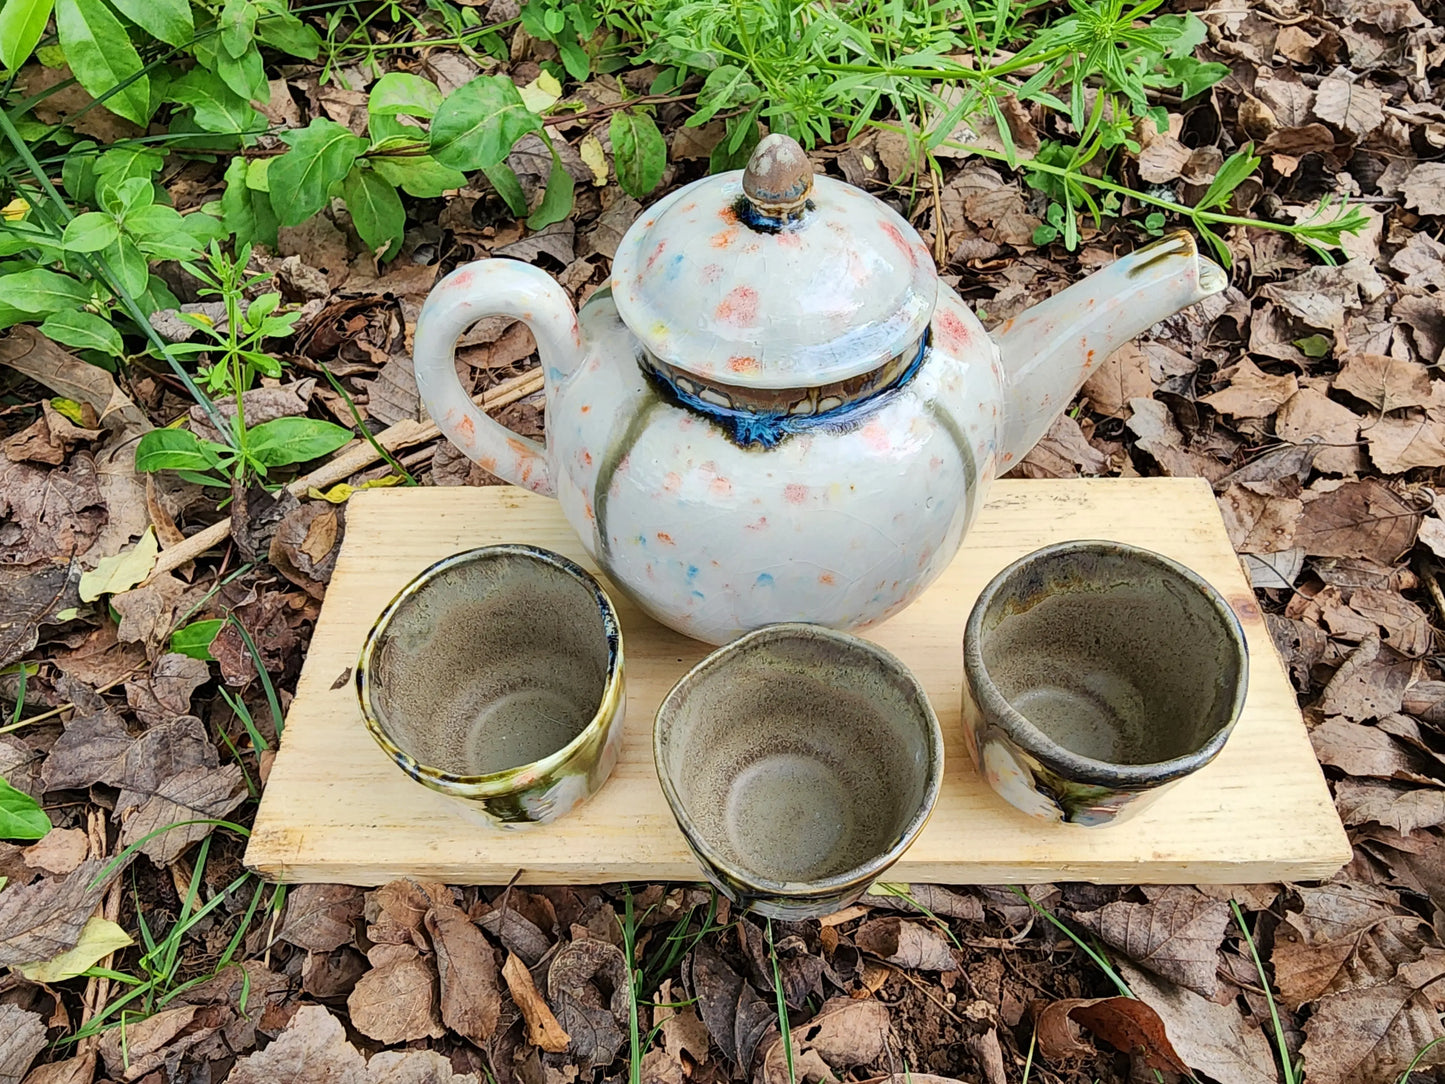 Japanese Inspired East Asian Style Tea Set